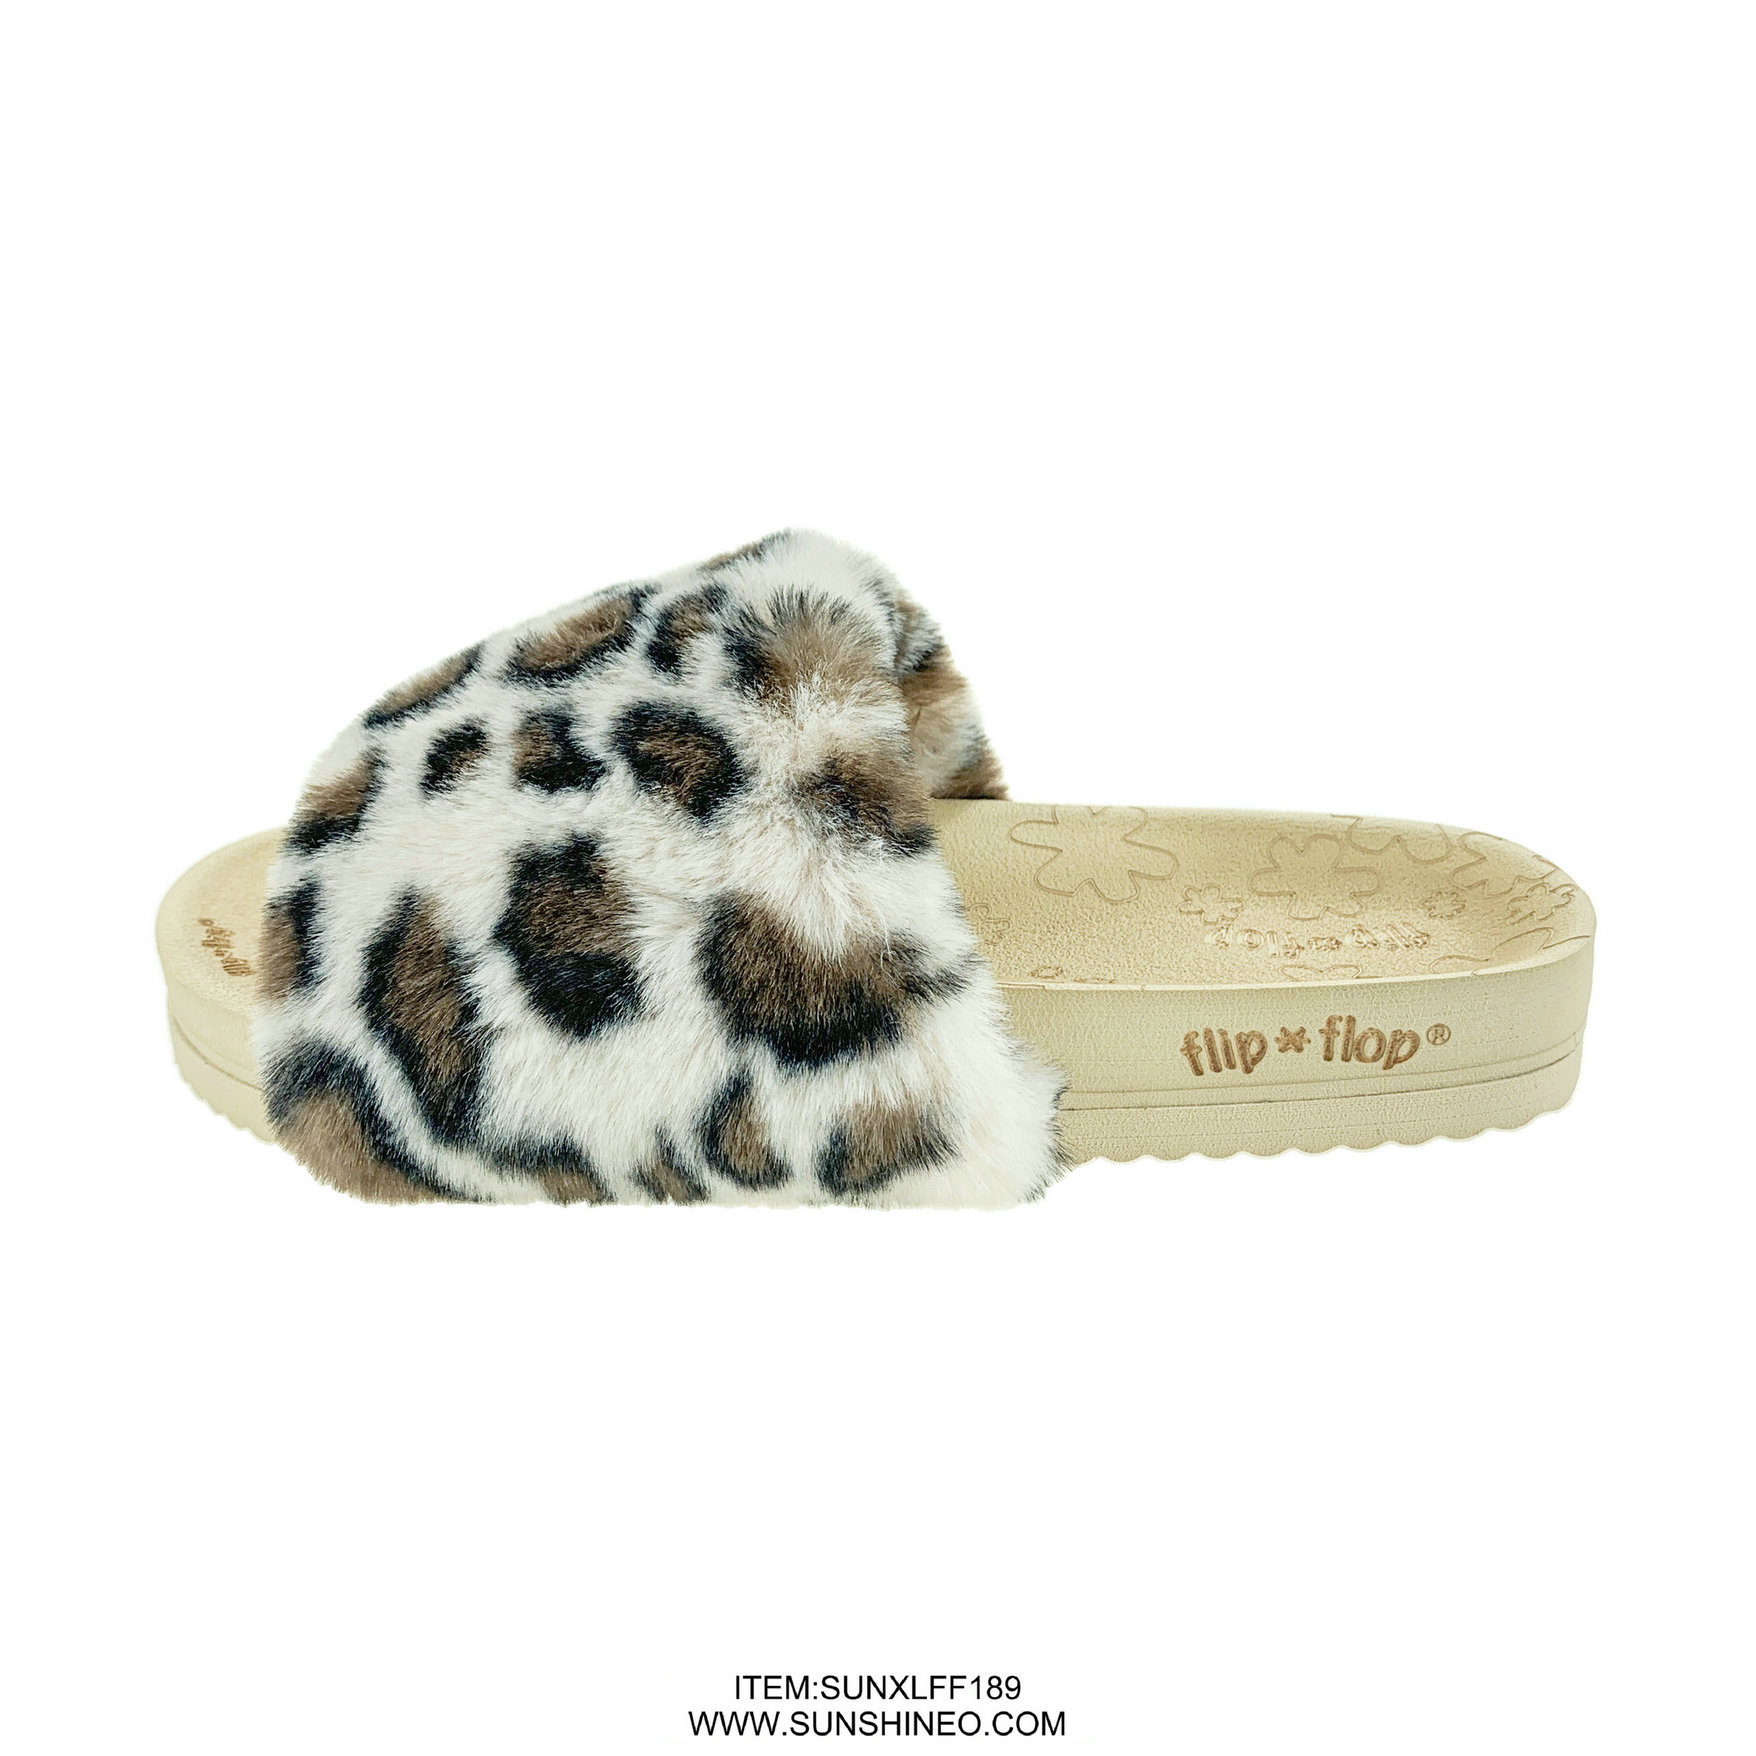 SUNXLFF189 fur flip flop sandals winter slippers